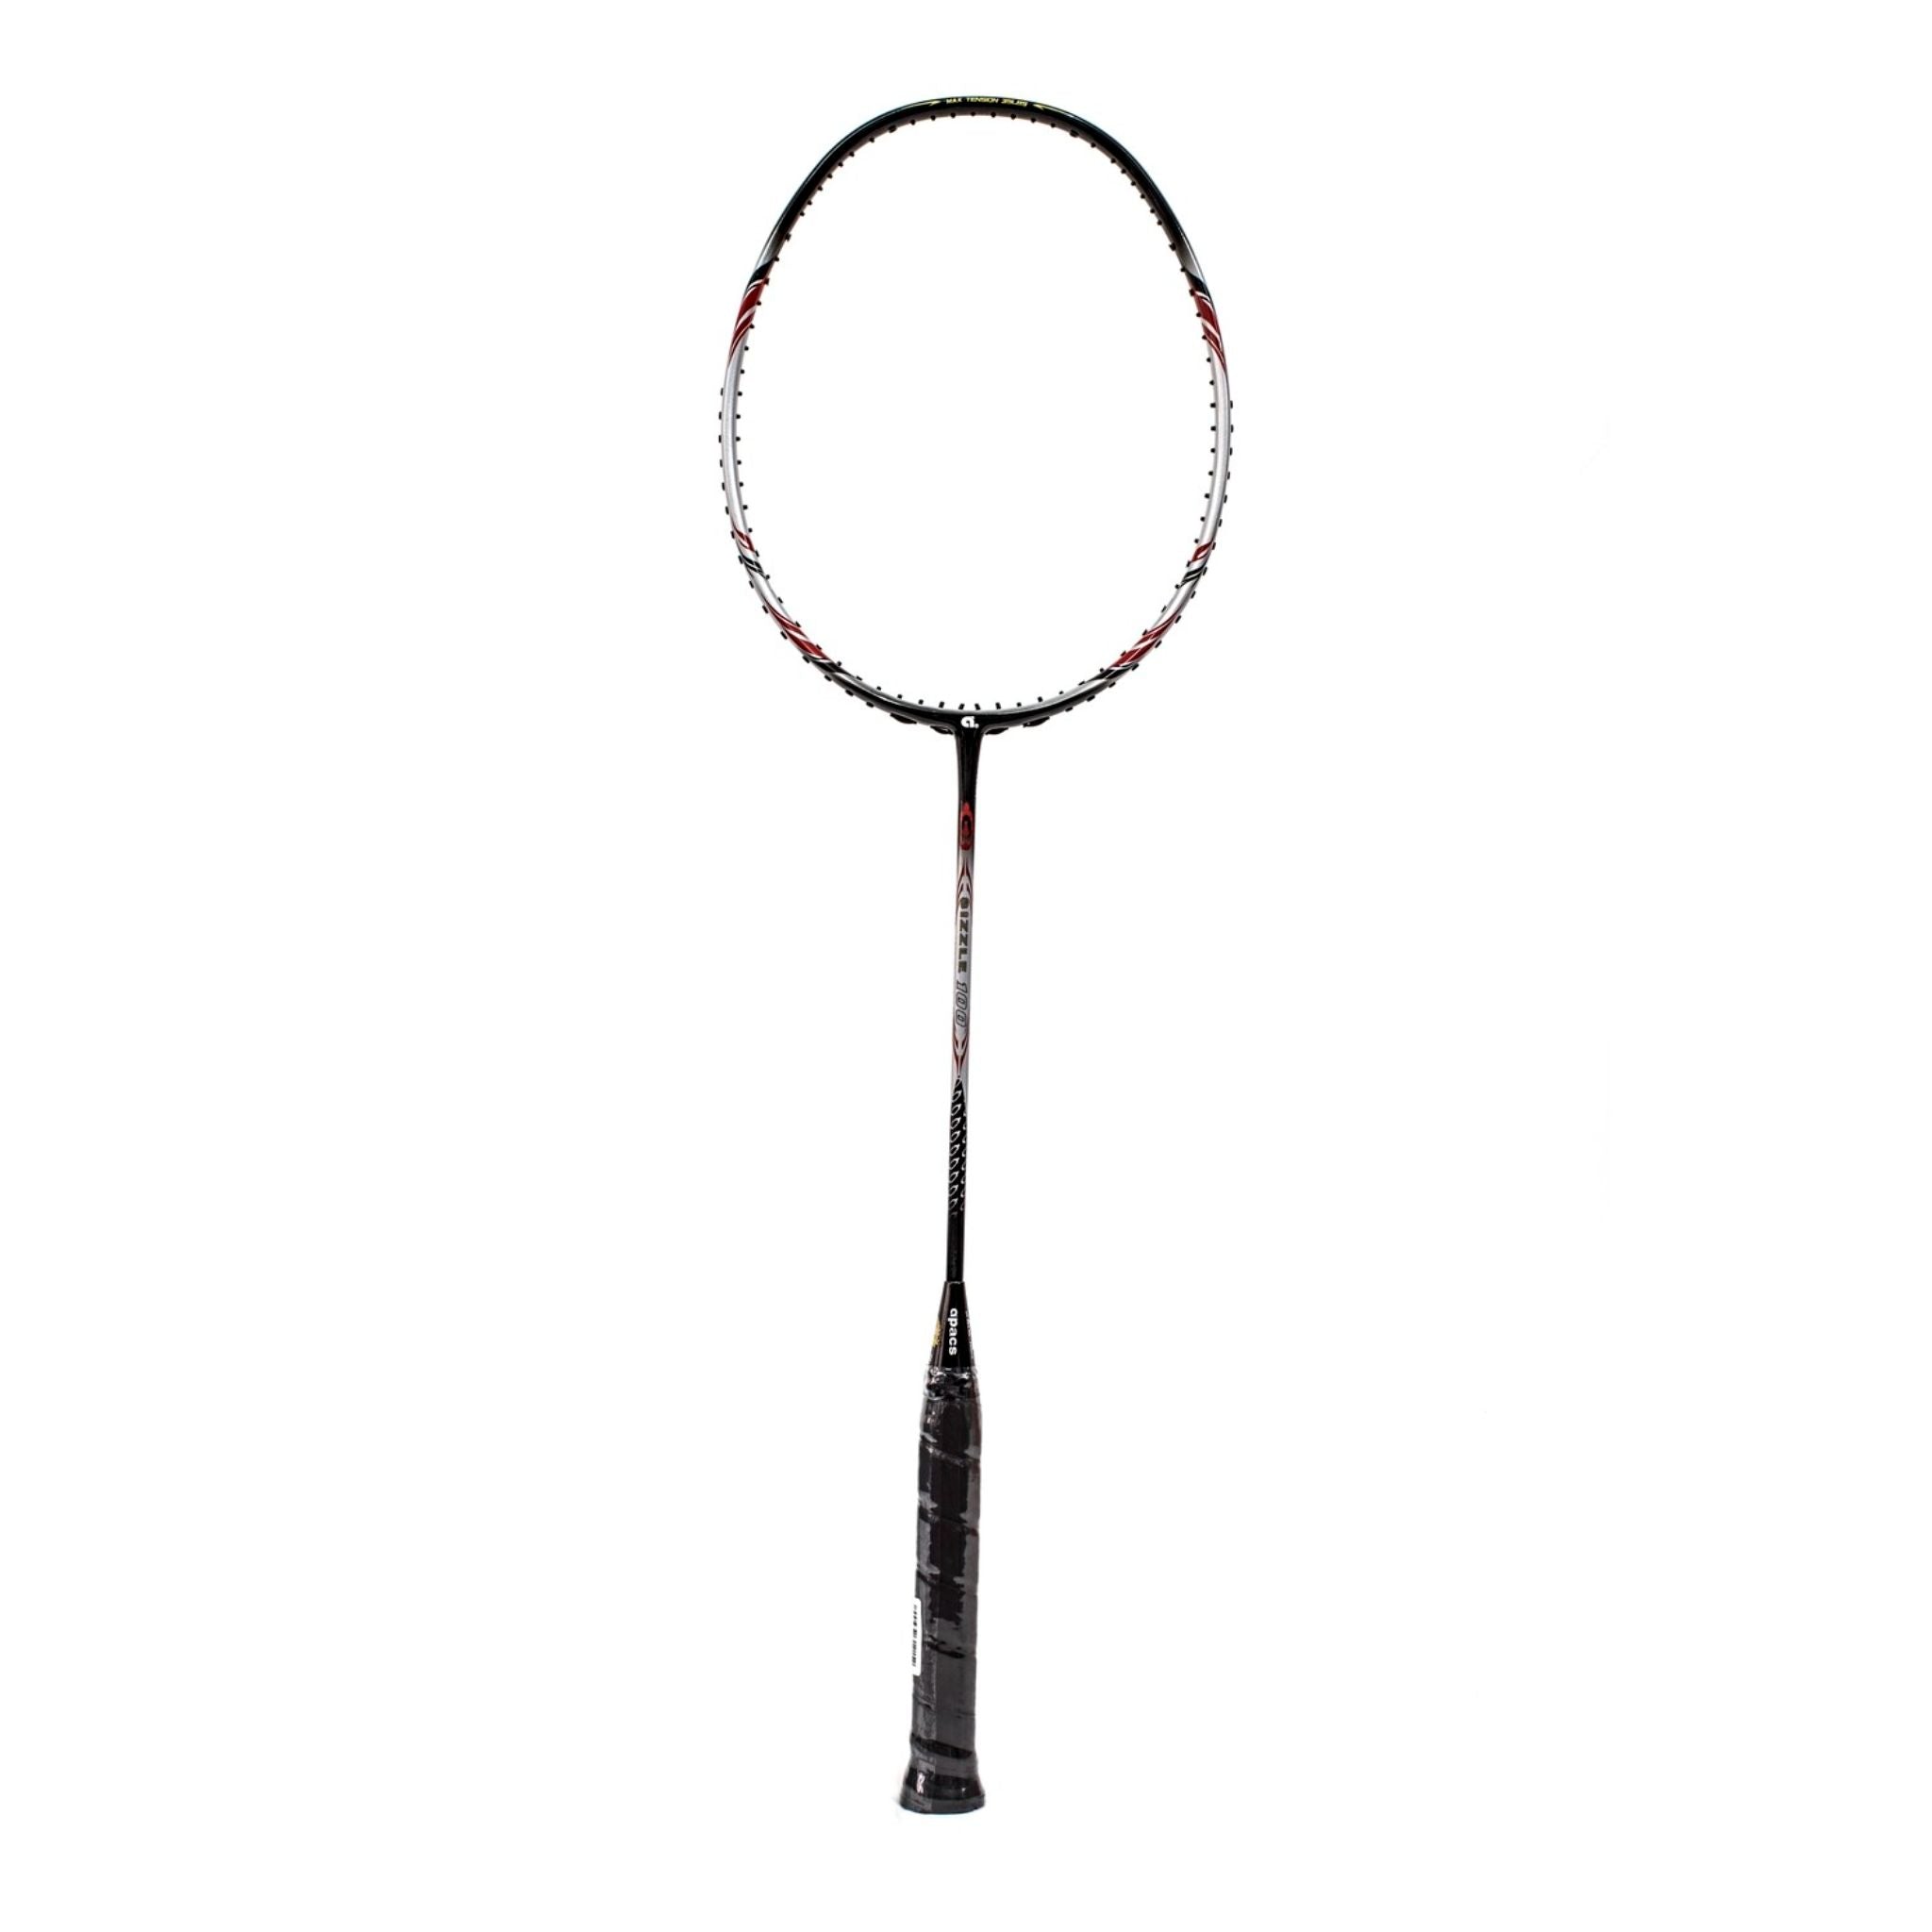 APACS Sizzle 100 Badminton Racket